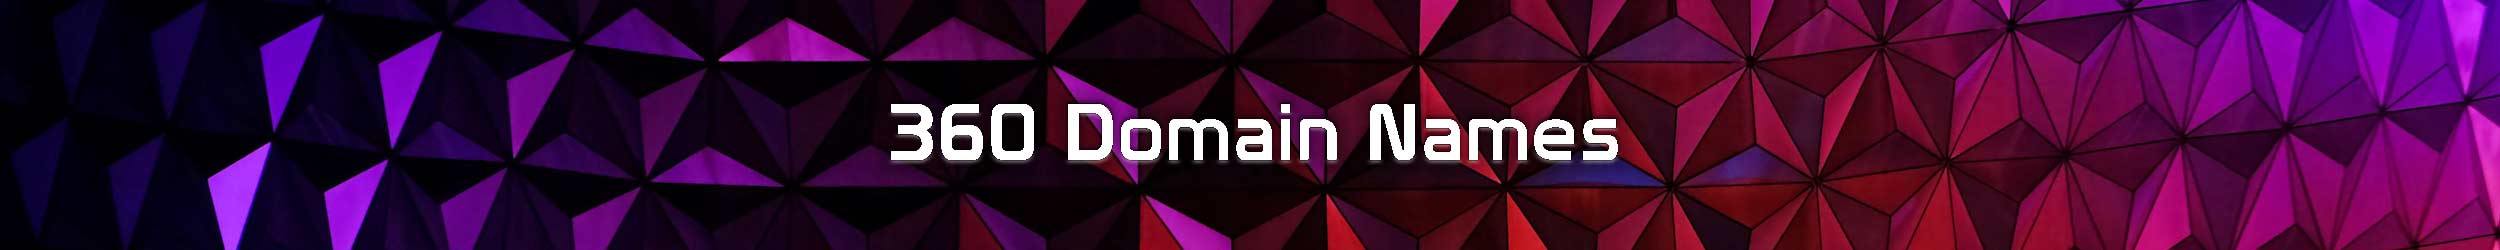 360 domain names